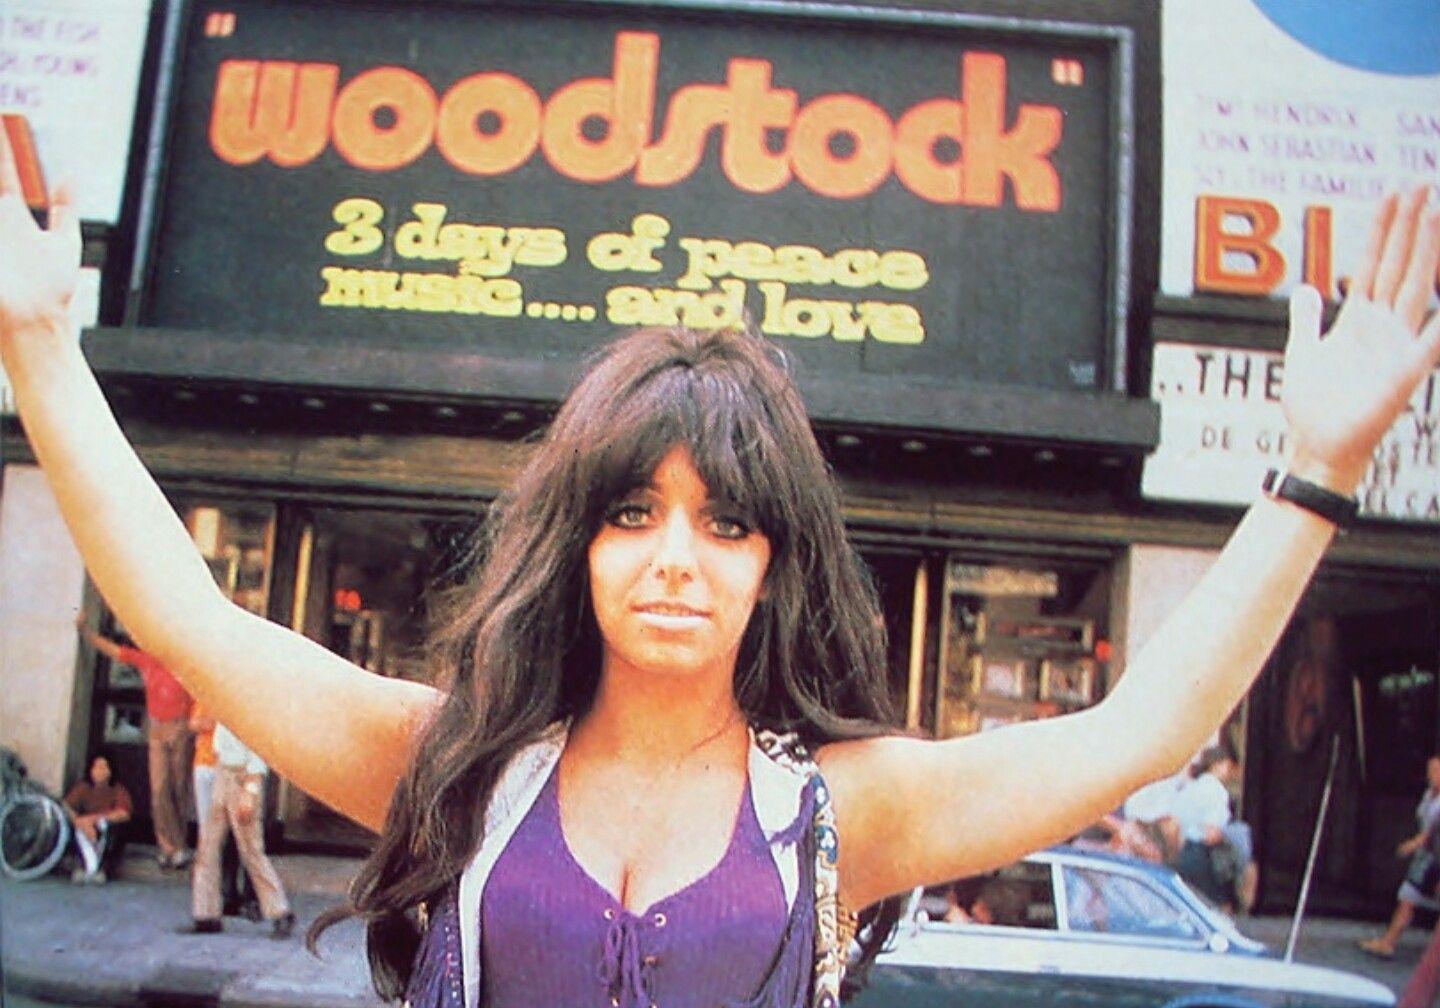 Mariska and a woodstock billboard!s and 70s vibes. Mariska